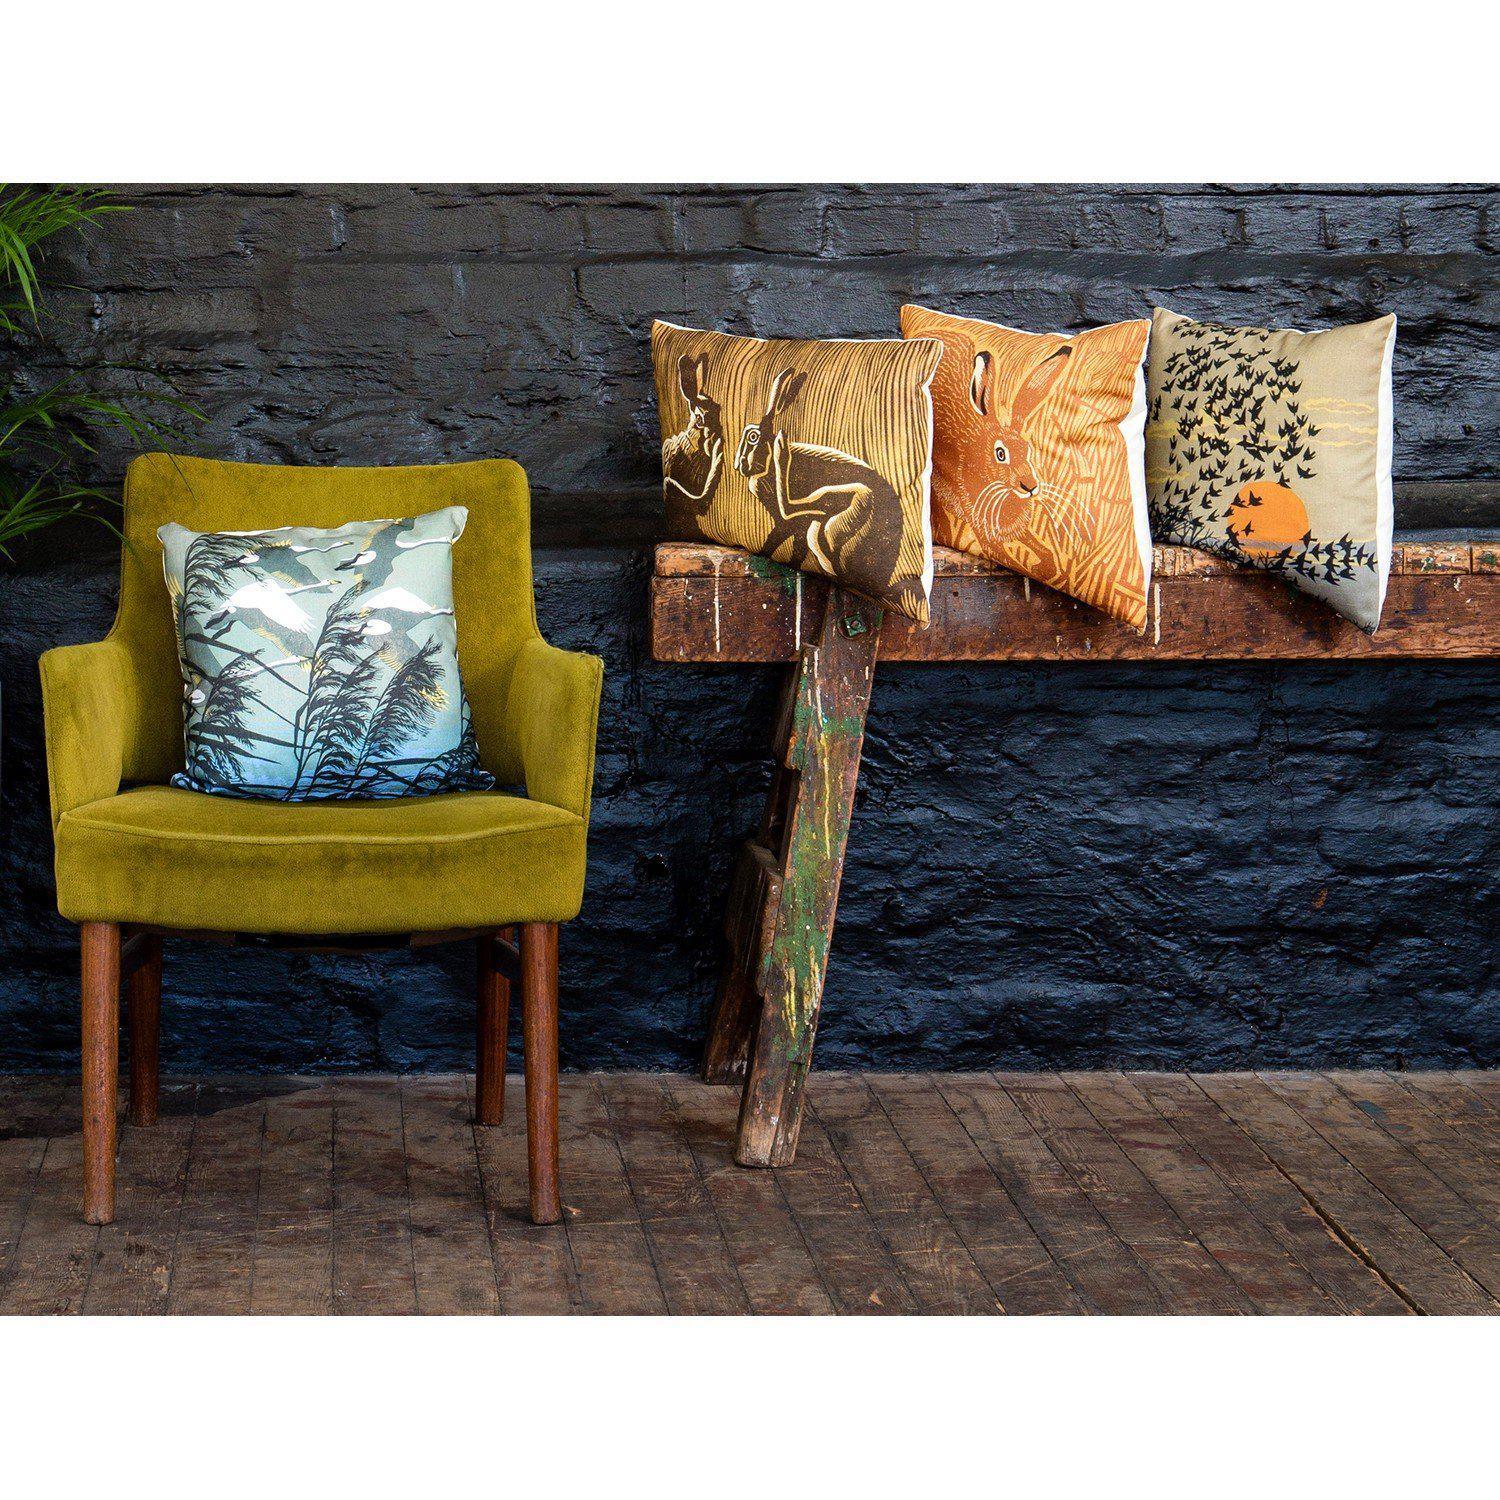 Redwings II - Robert Gillmor Cushion - Handmade Cushions UK - WeLoveCushions